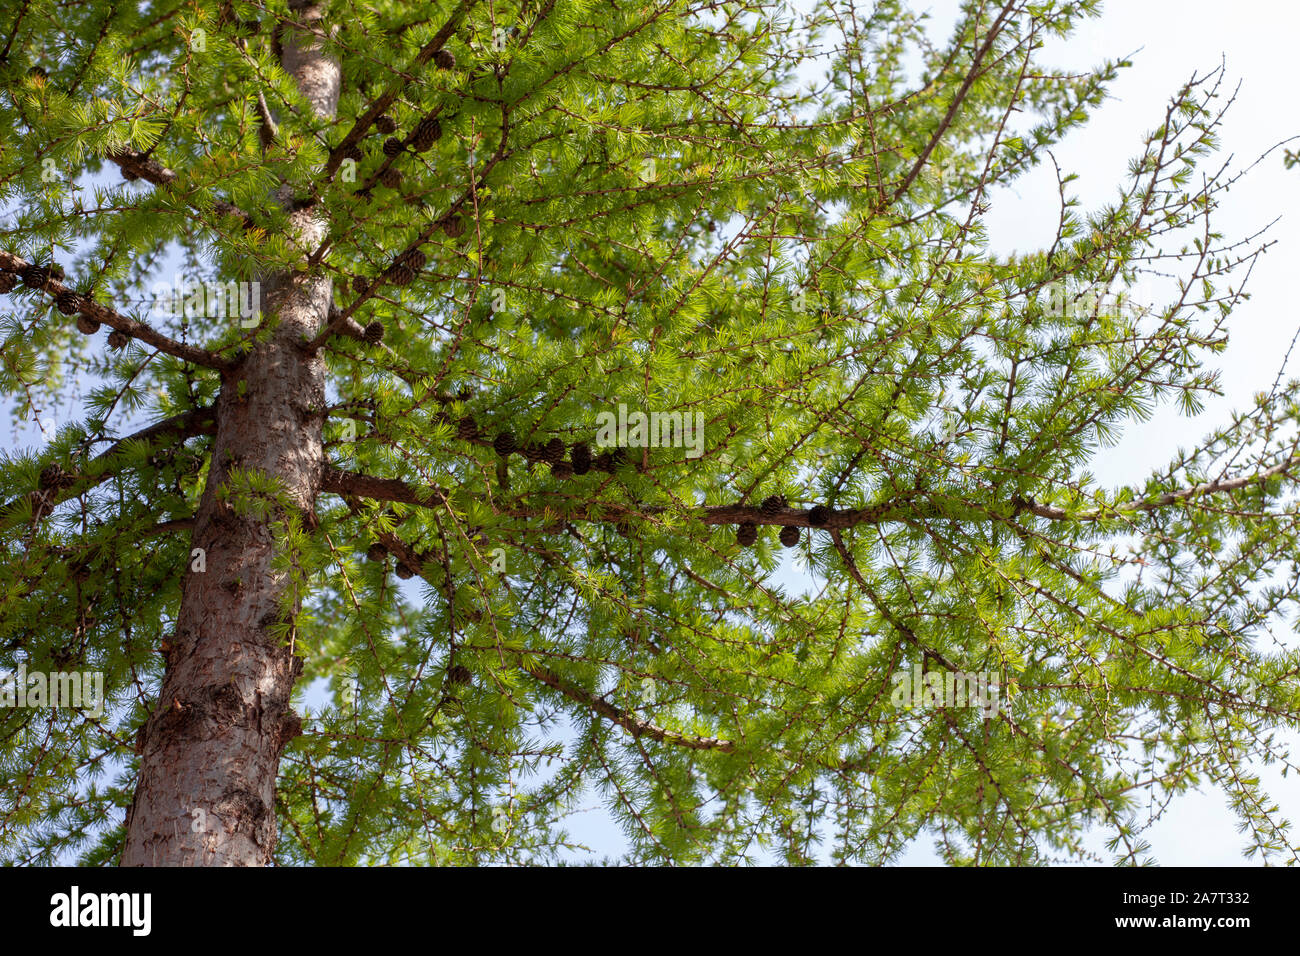 Closeup of European larch (Larix decidua) bark and needles on a street tree, Hoxton, London N1 Stock Photo